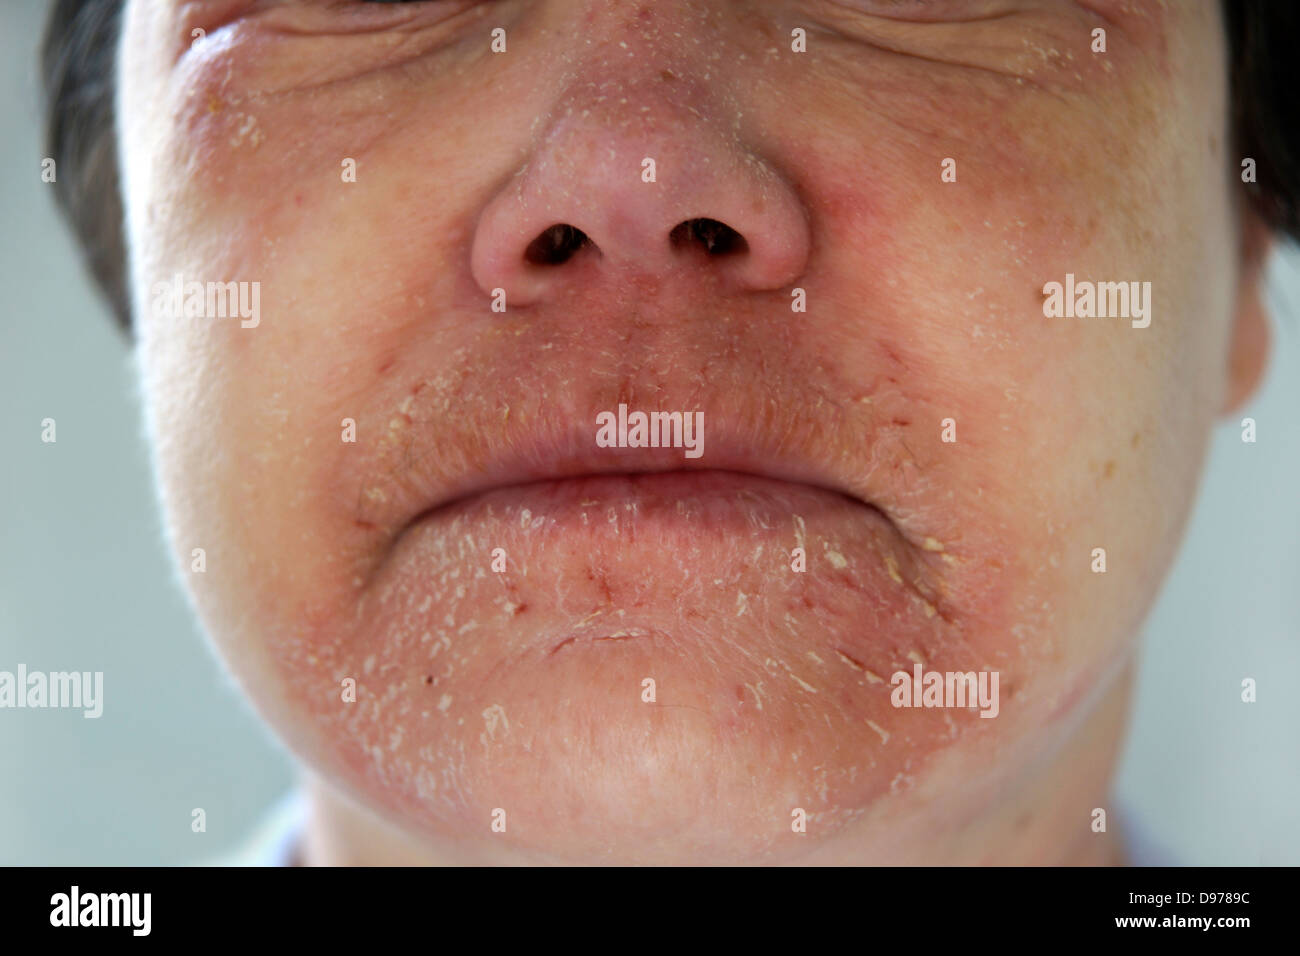 woman with eczema rash on face